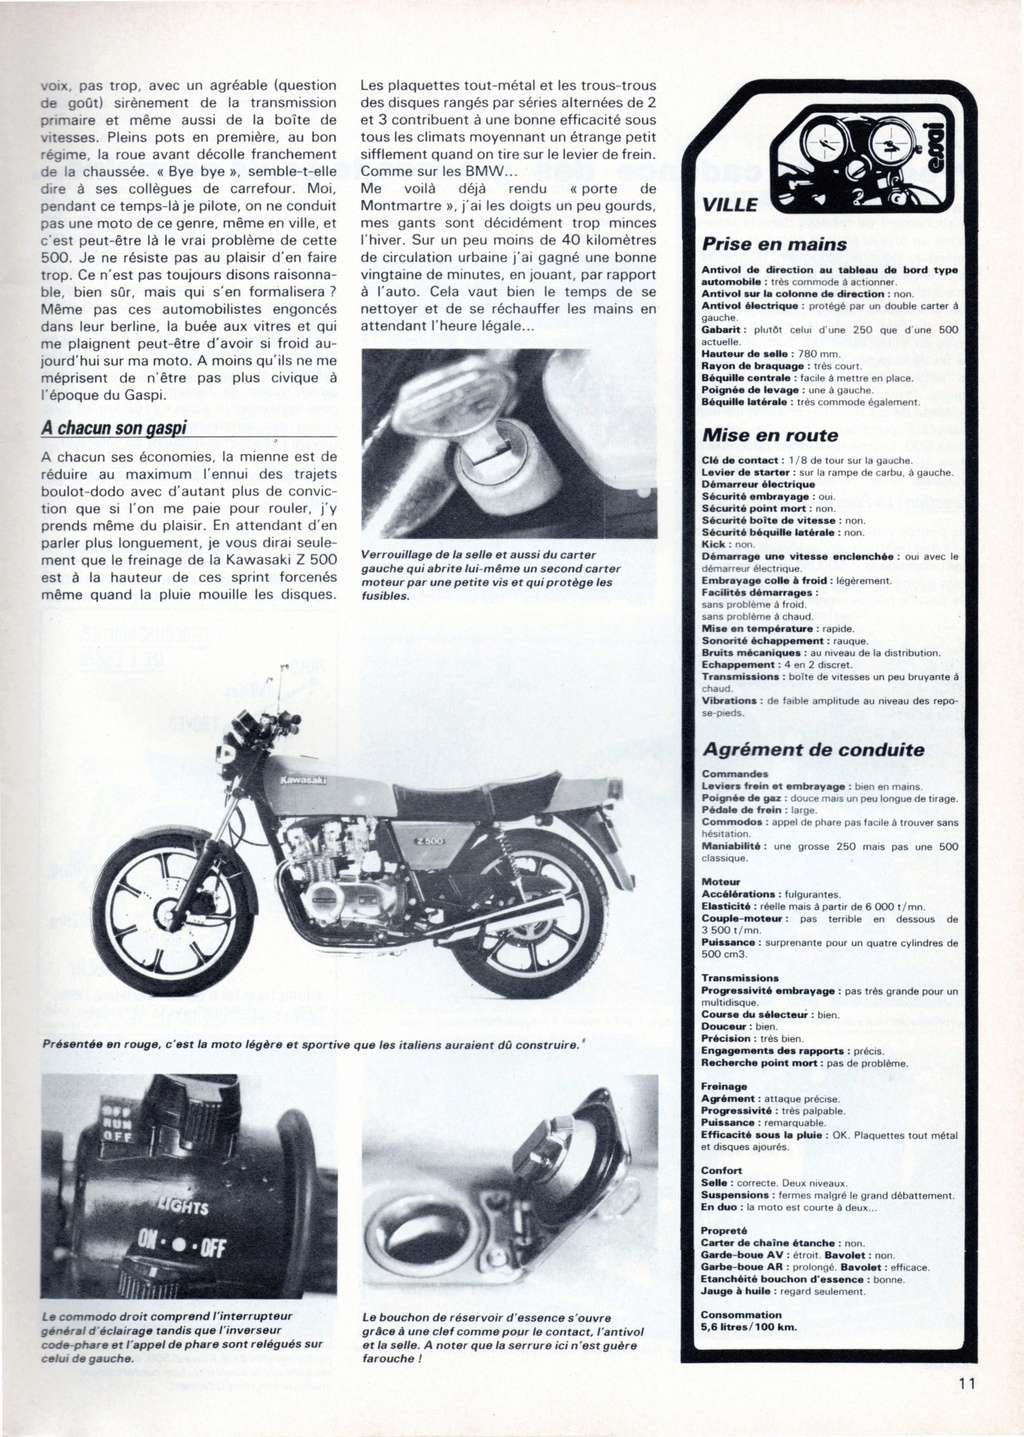 Essai Z500 Moto revue 2441 20 dec 1979 Moto_r17